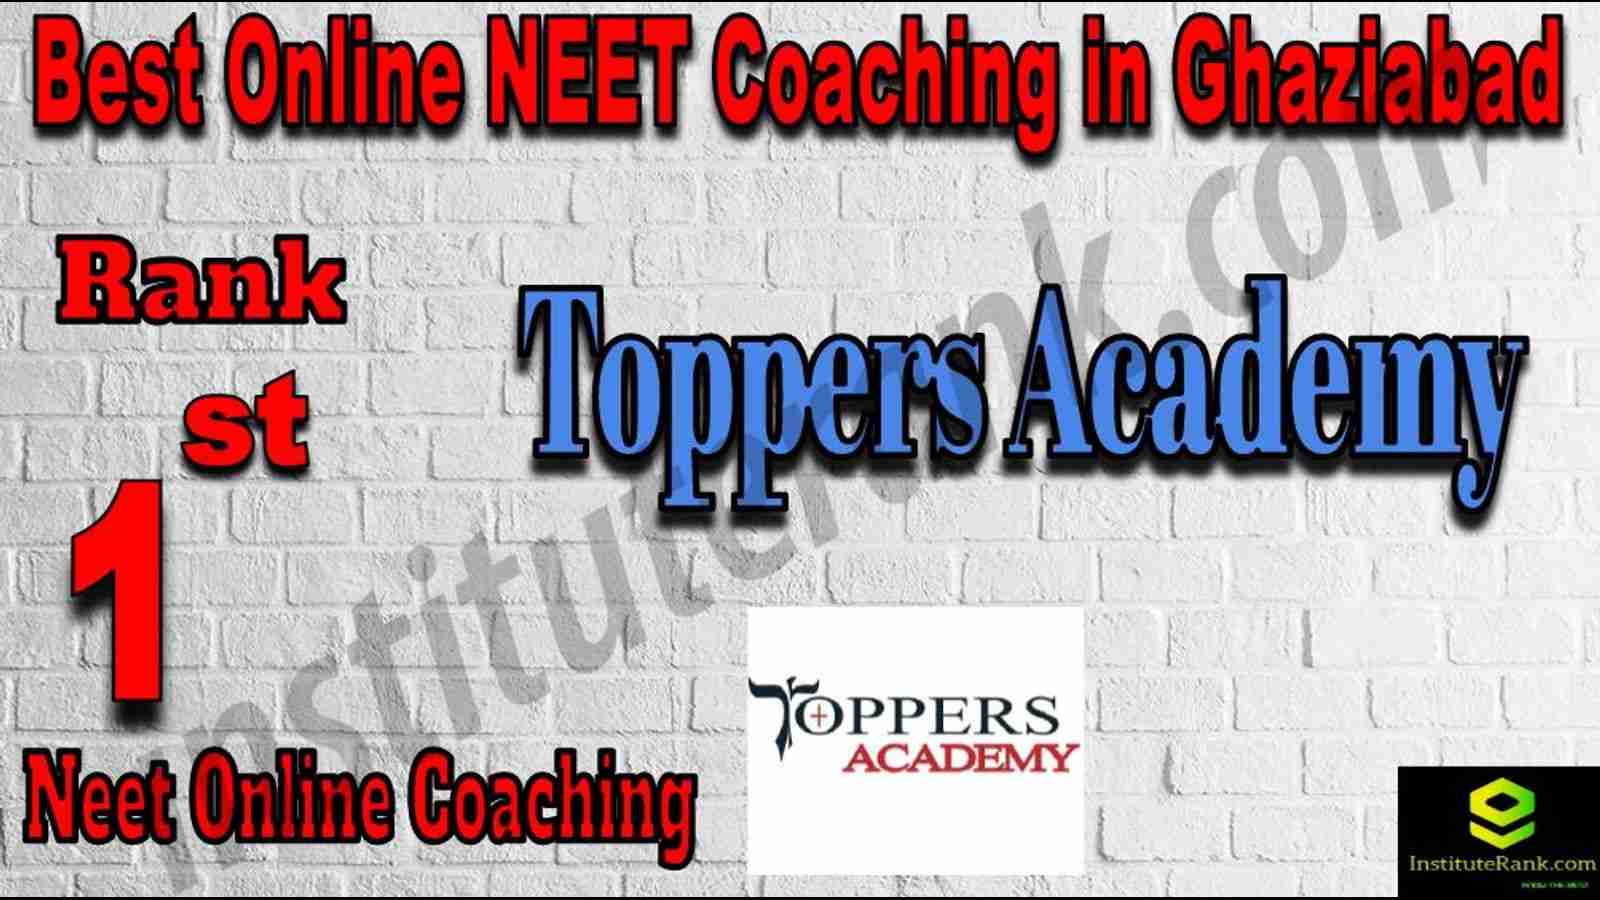 1st Best Online Neet Coaching in Ghaziabad 